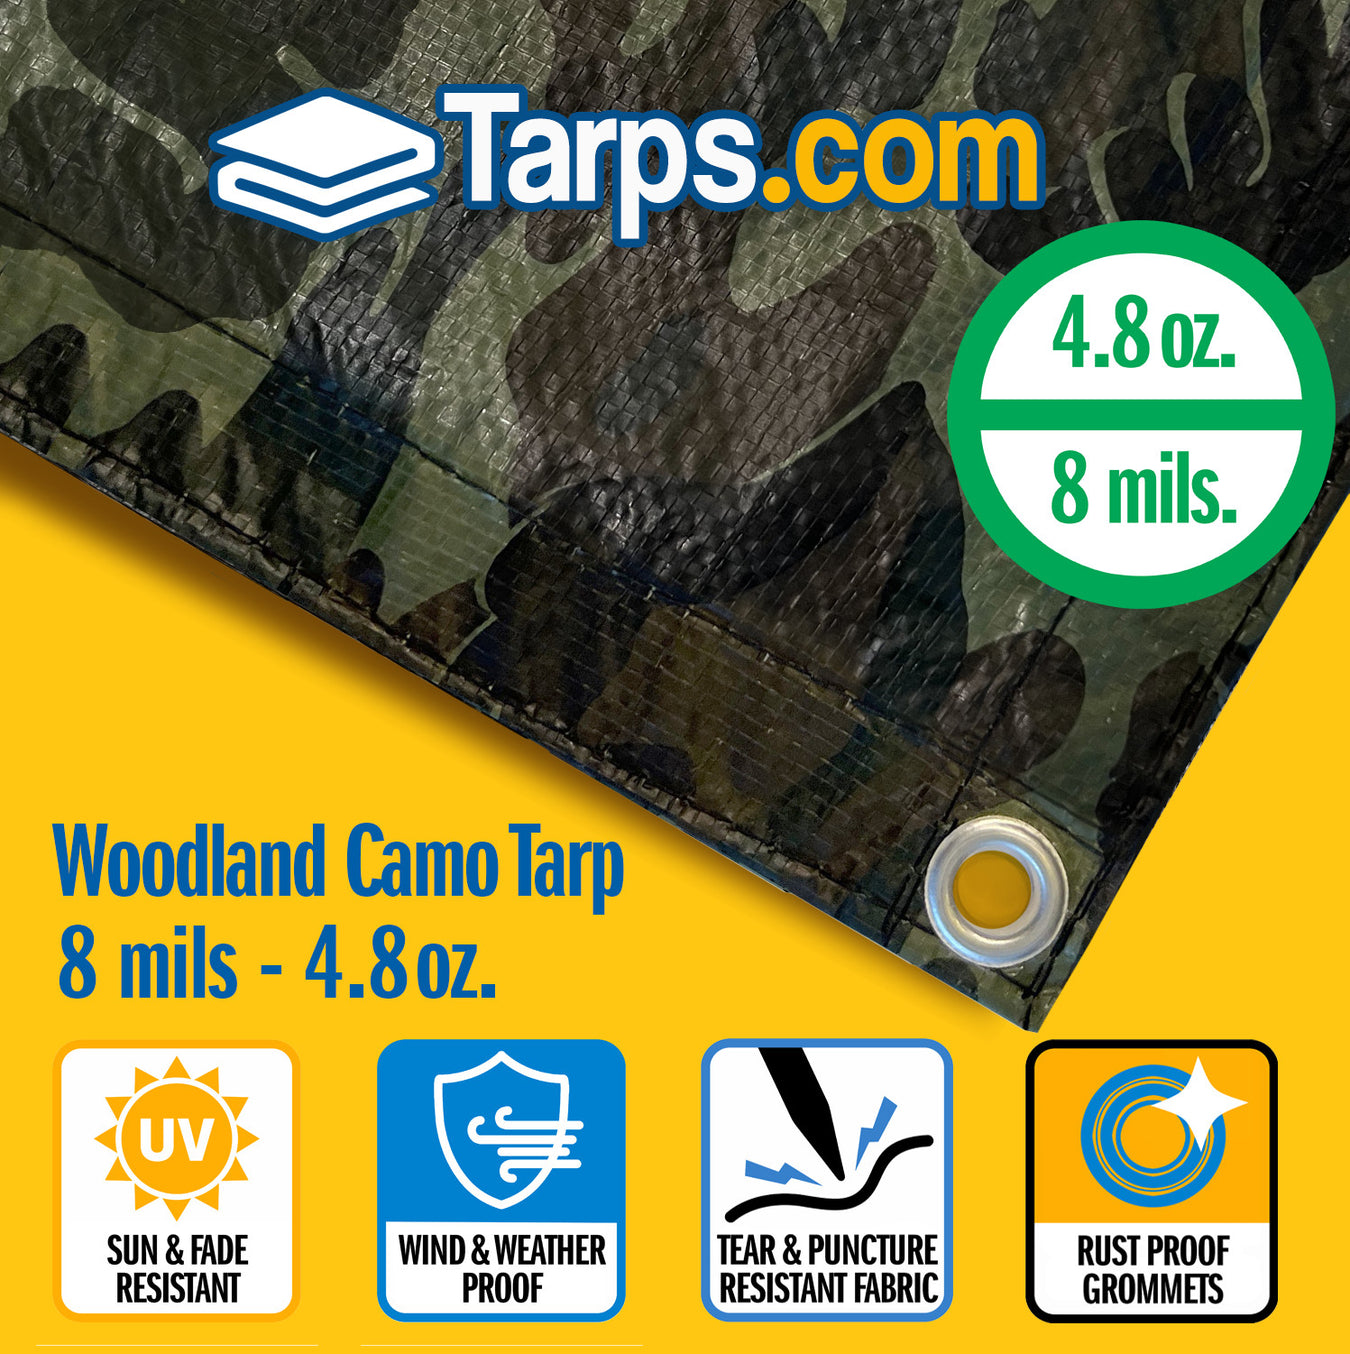 Tarps.com - Tarps, Canopies, Fittings & more...